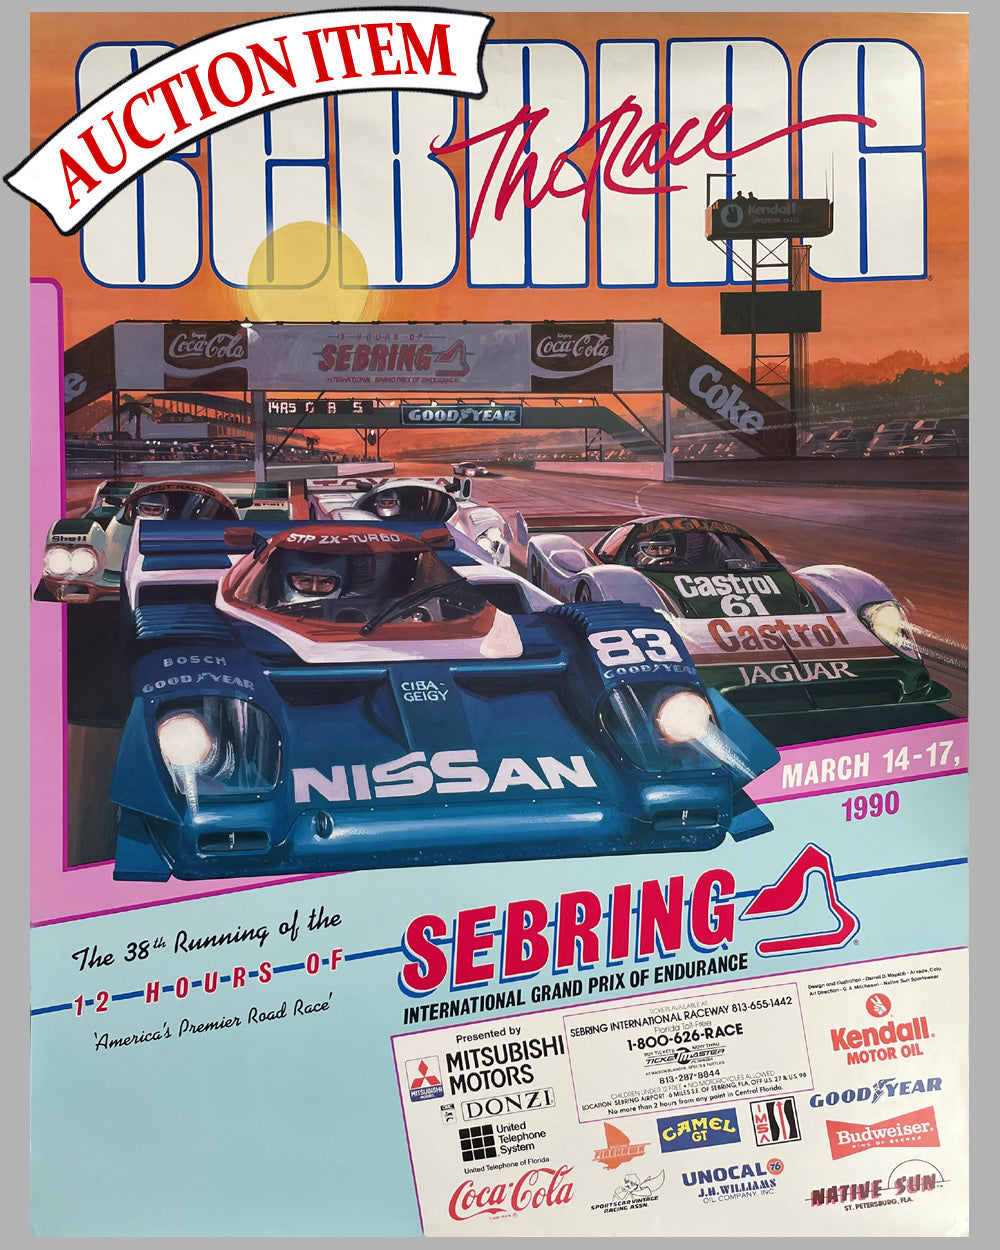 12 Hours of Sebring 1990 original race poster by Darrell Mayabb